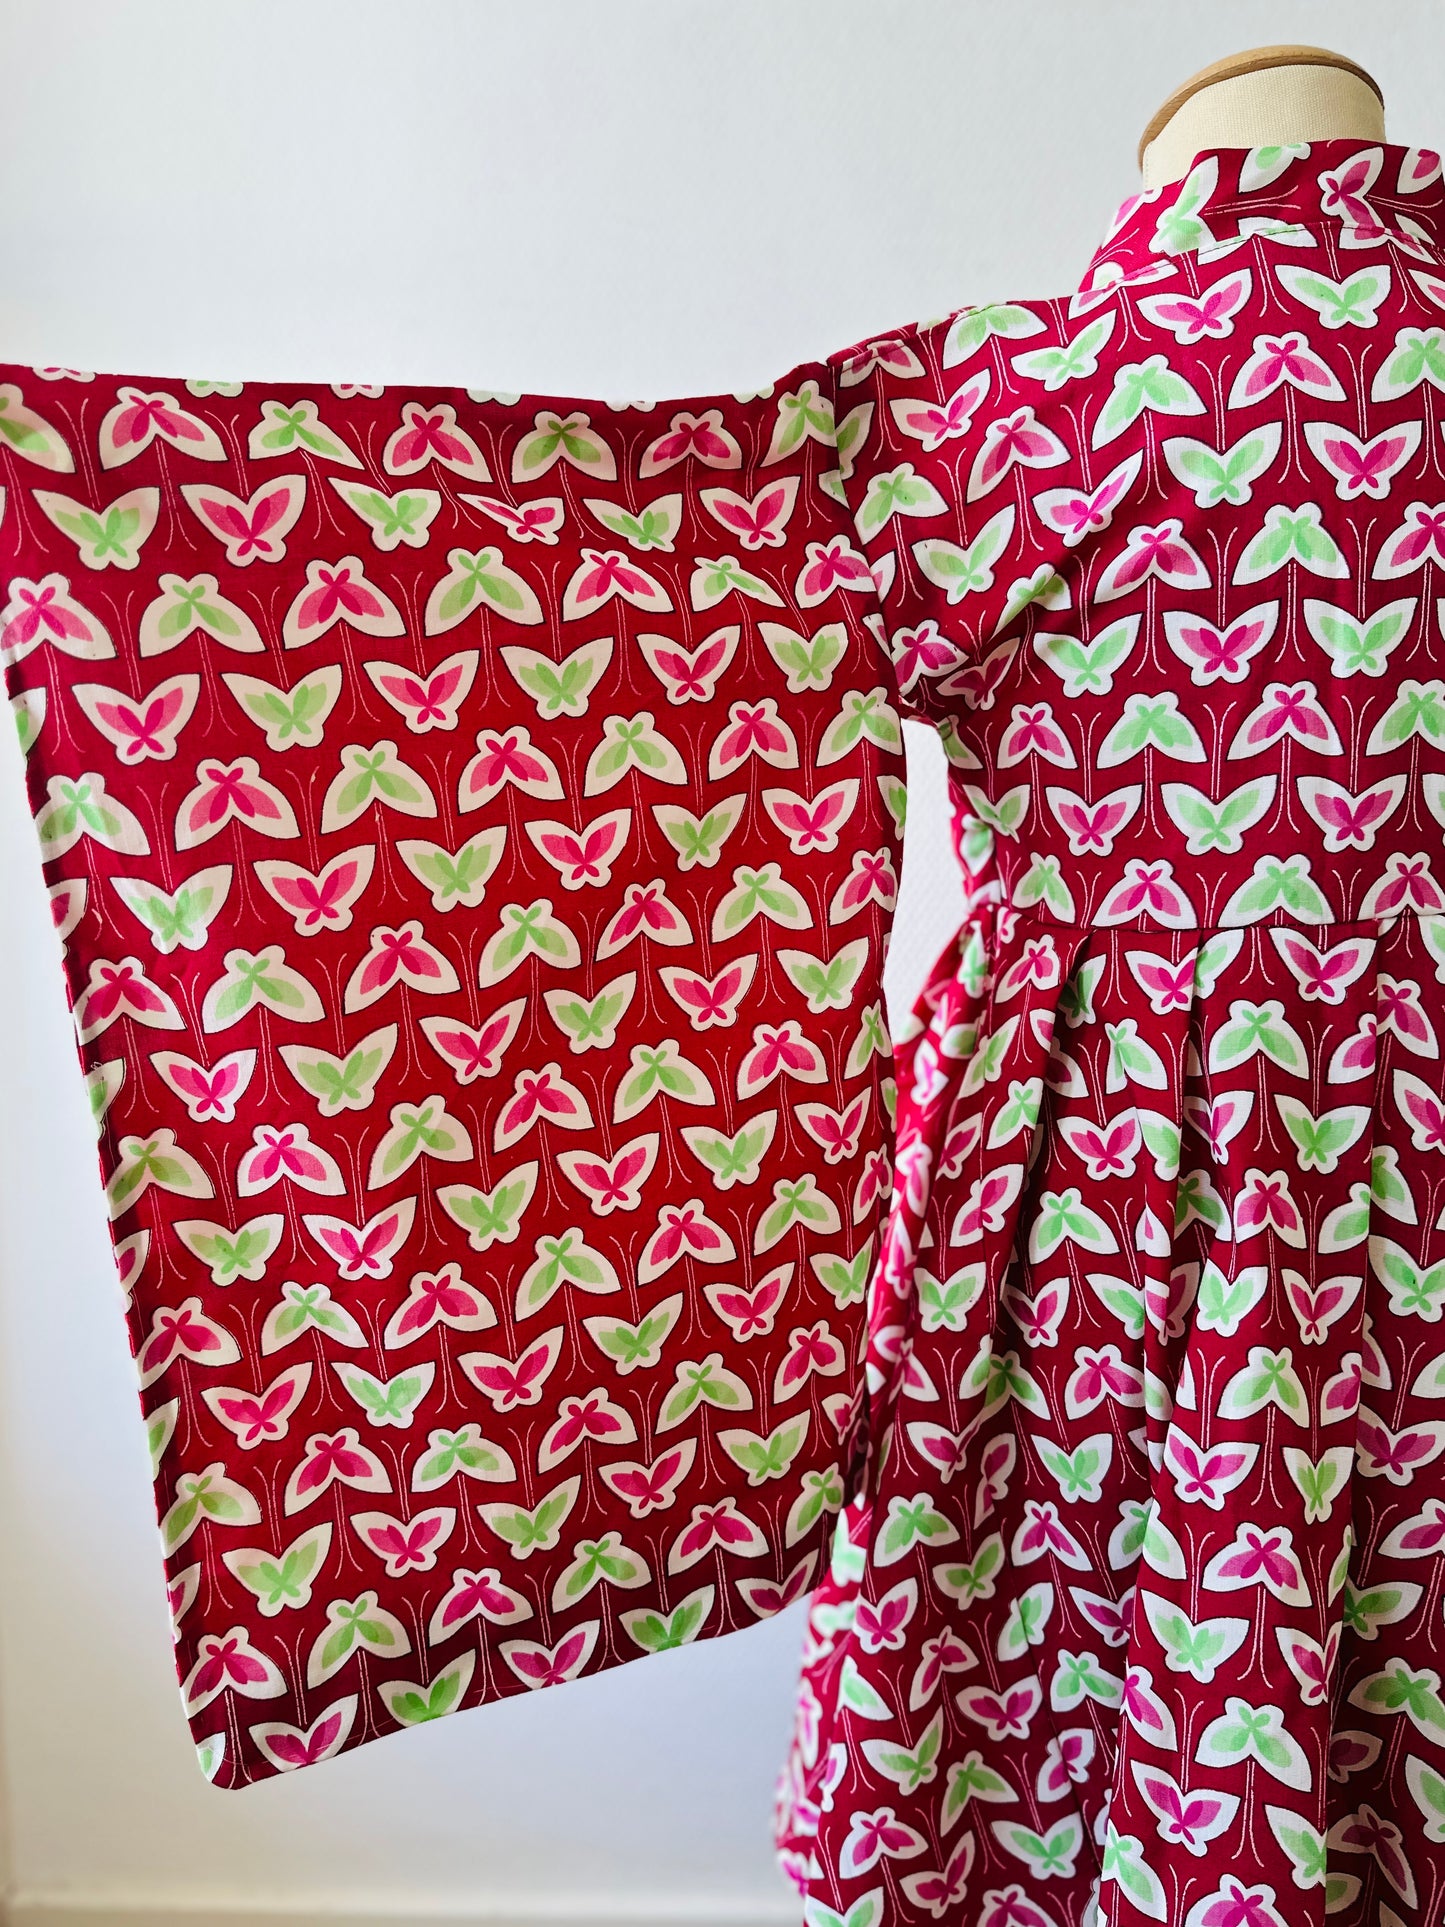 【Red,Little butterflies】（size 130）Yukata Dress＜New・cotton＞For Kids,For Women,Japanese kimono,Japan unisexese Clothing,unisex,Japanese Gifts,Original Item